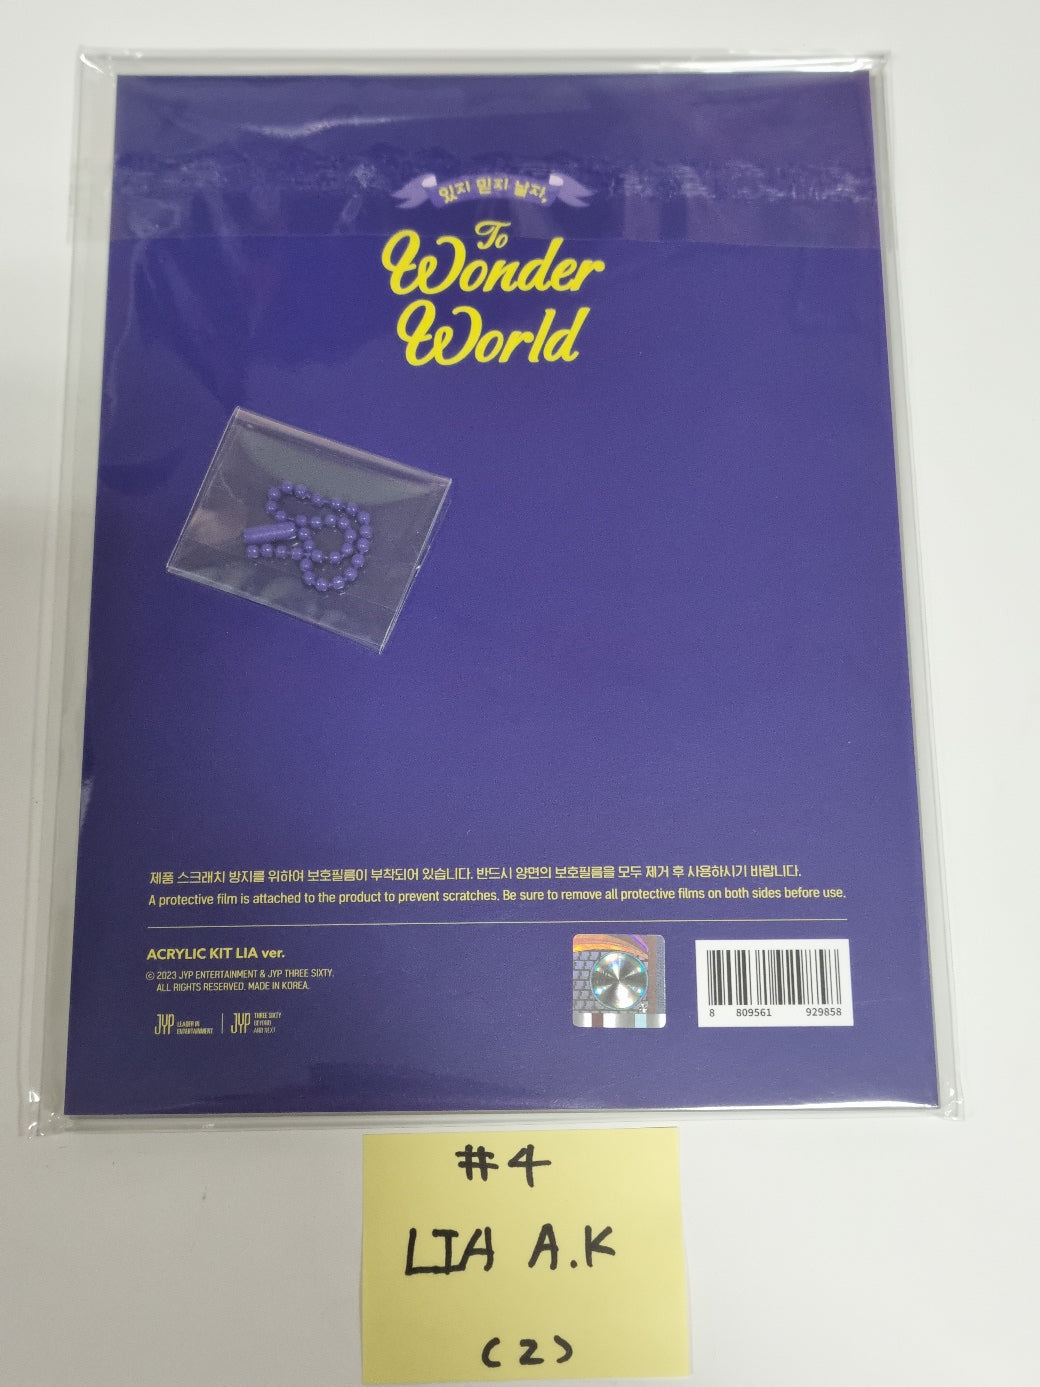 ITZY "Wonder World" The 2nd Fan Meeting - Official MD [Wonder World Pass, Trading Photocard, Photocard Holder, Acrylic Kit, 4 Cut Photo Sticker, Photo Slogan]